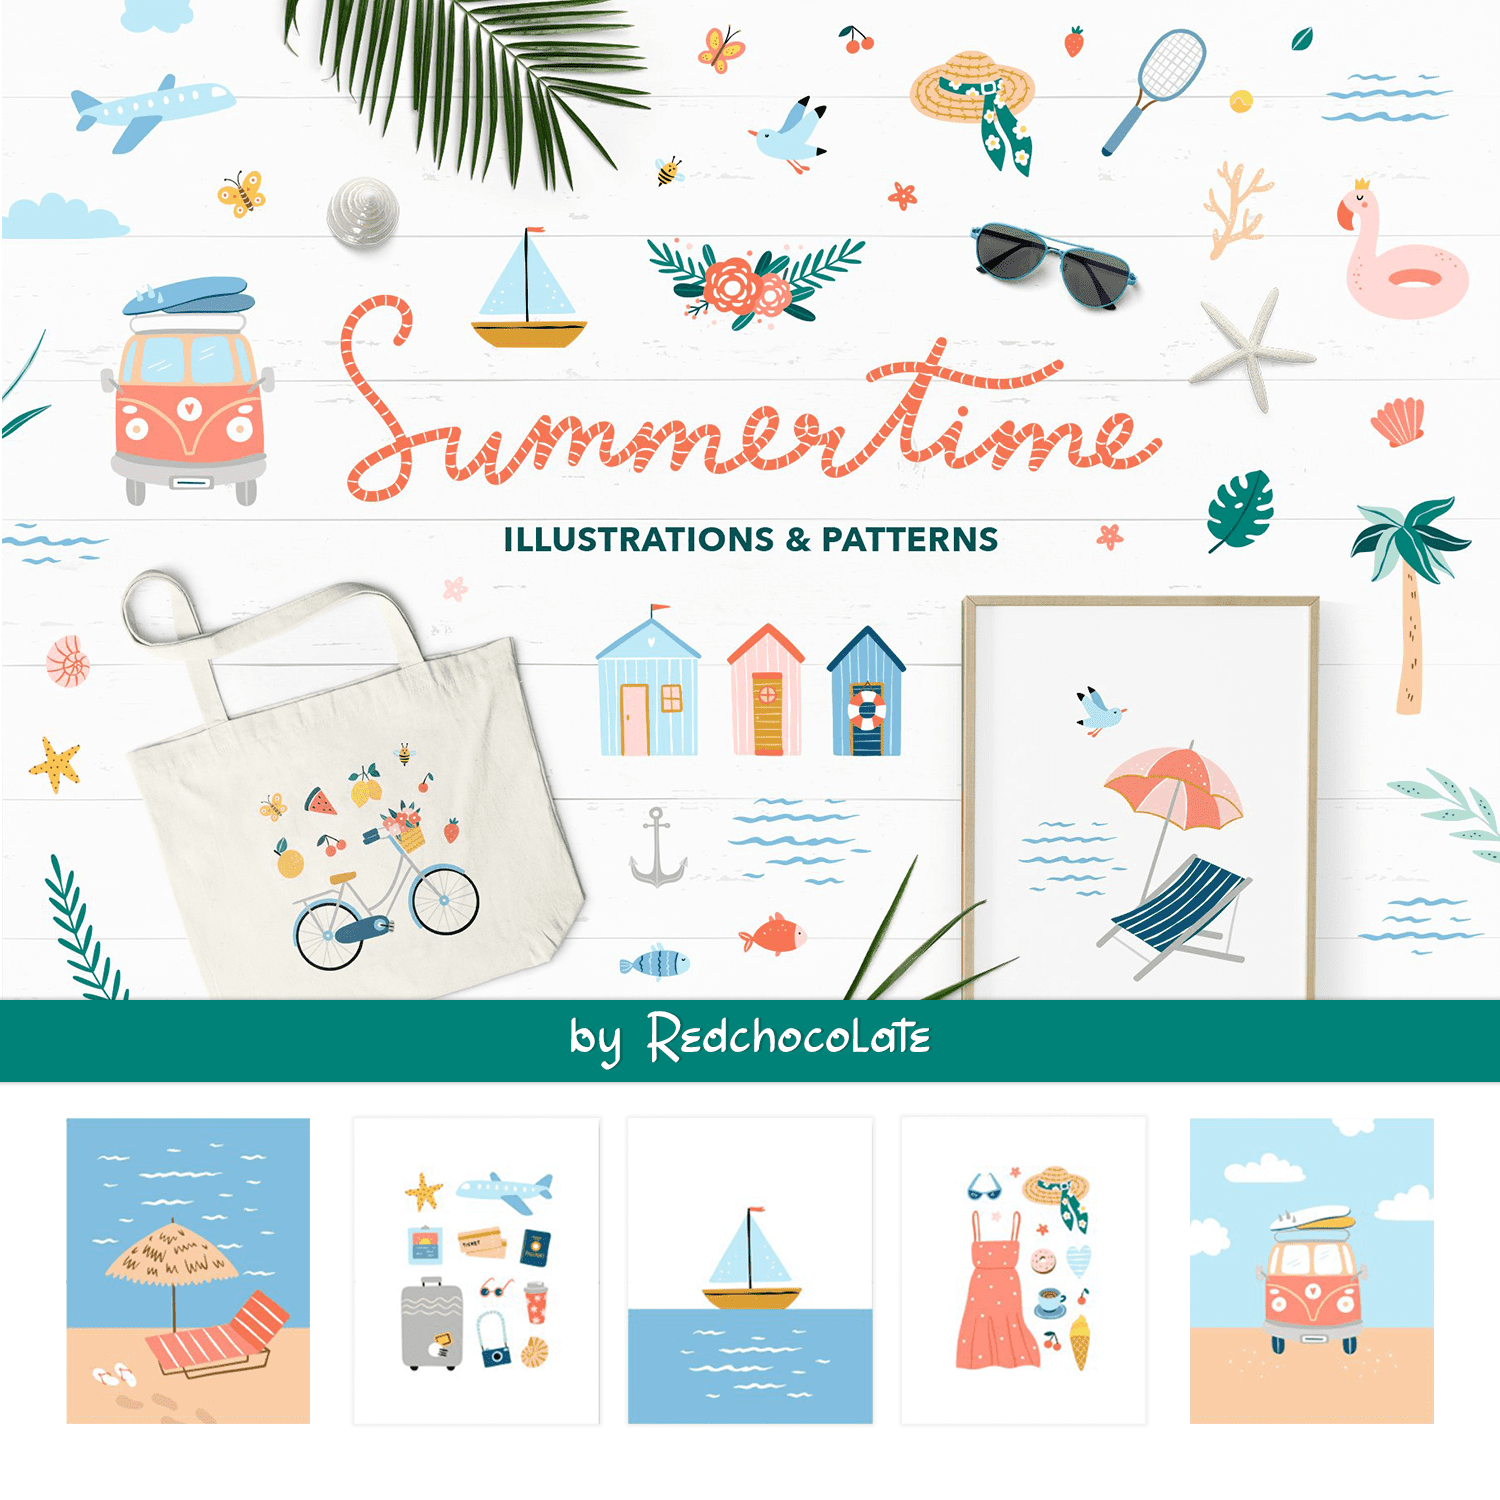 Summertime Illustrations & Patterns cover.